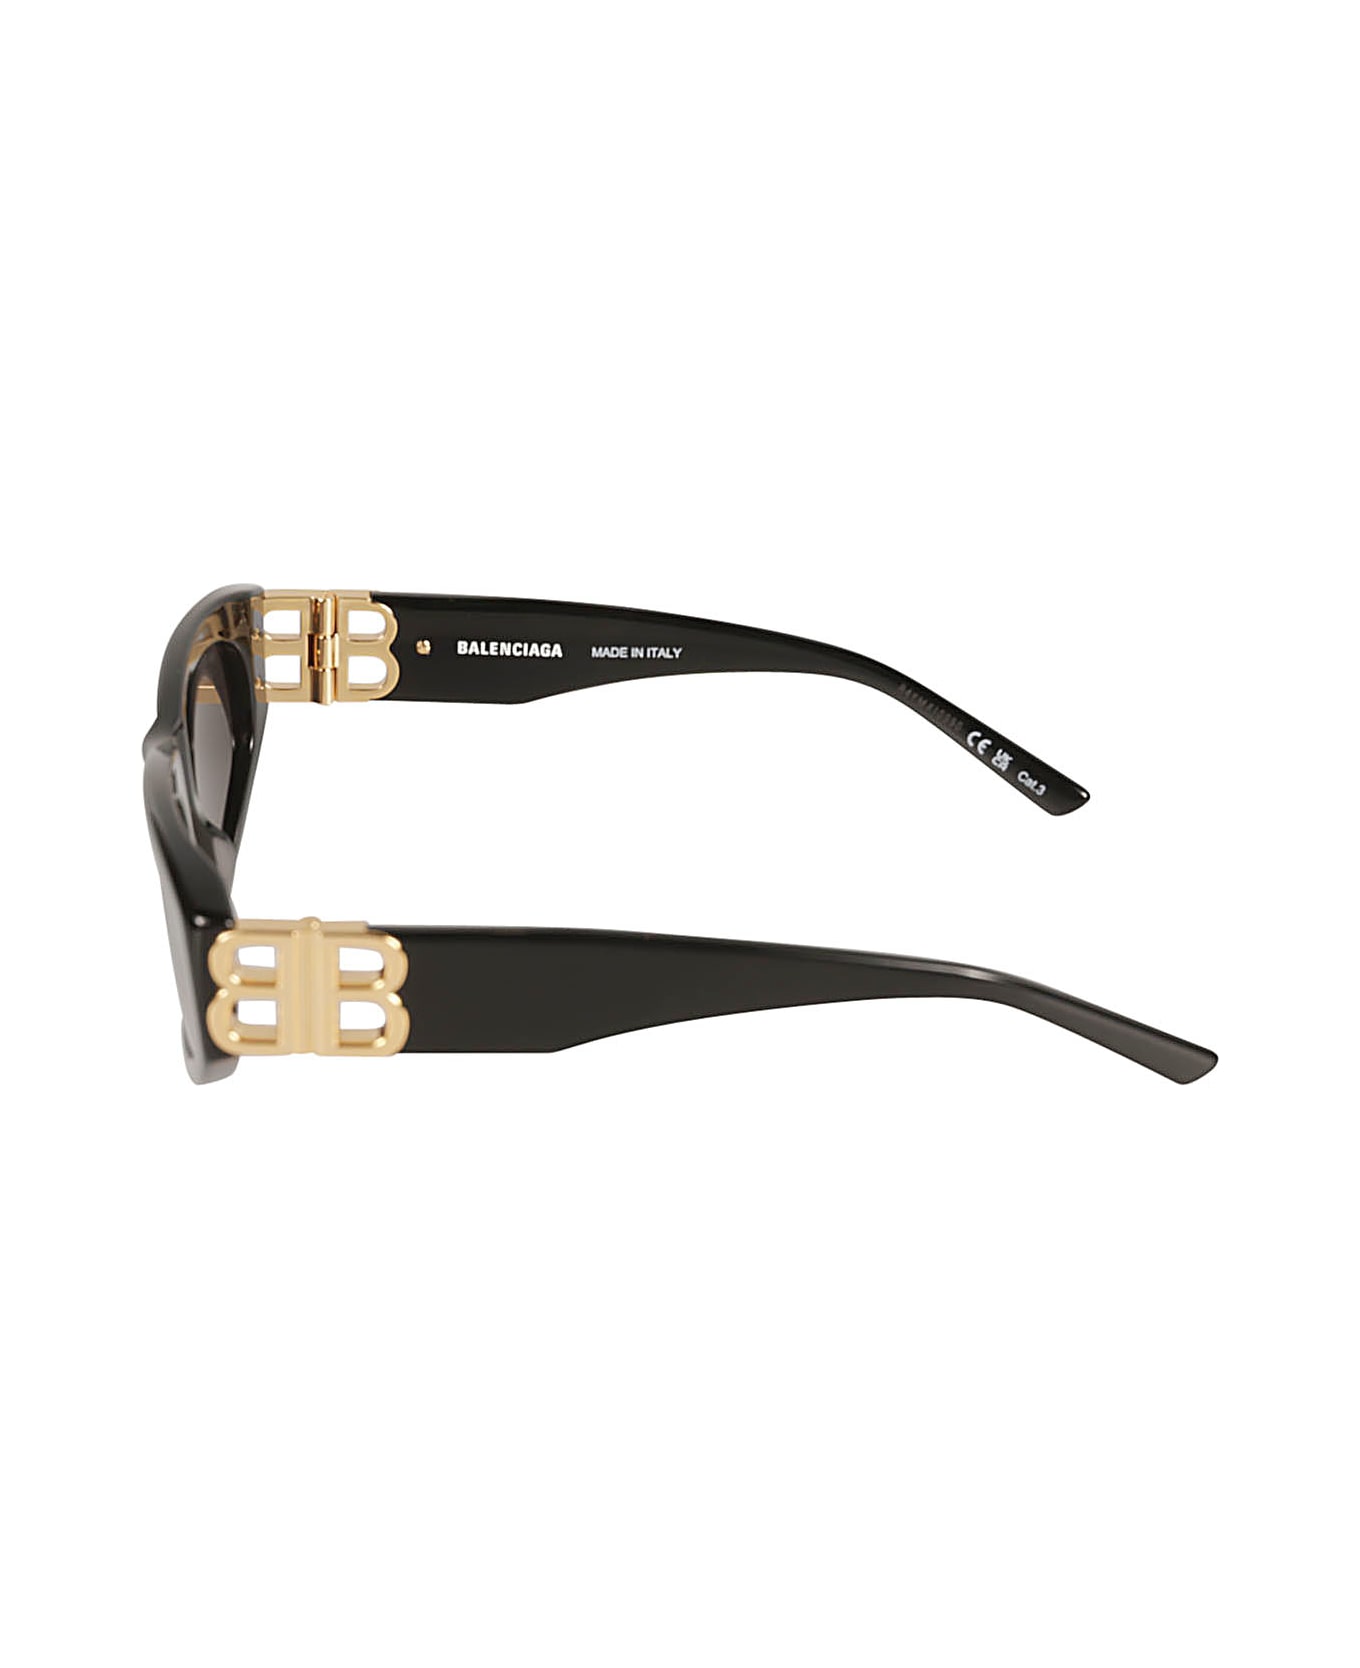 Balenciaga Eyewear Bb Hinge Logo Sunglasses - Black/Gold/Grey サングラス